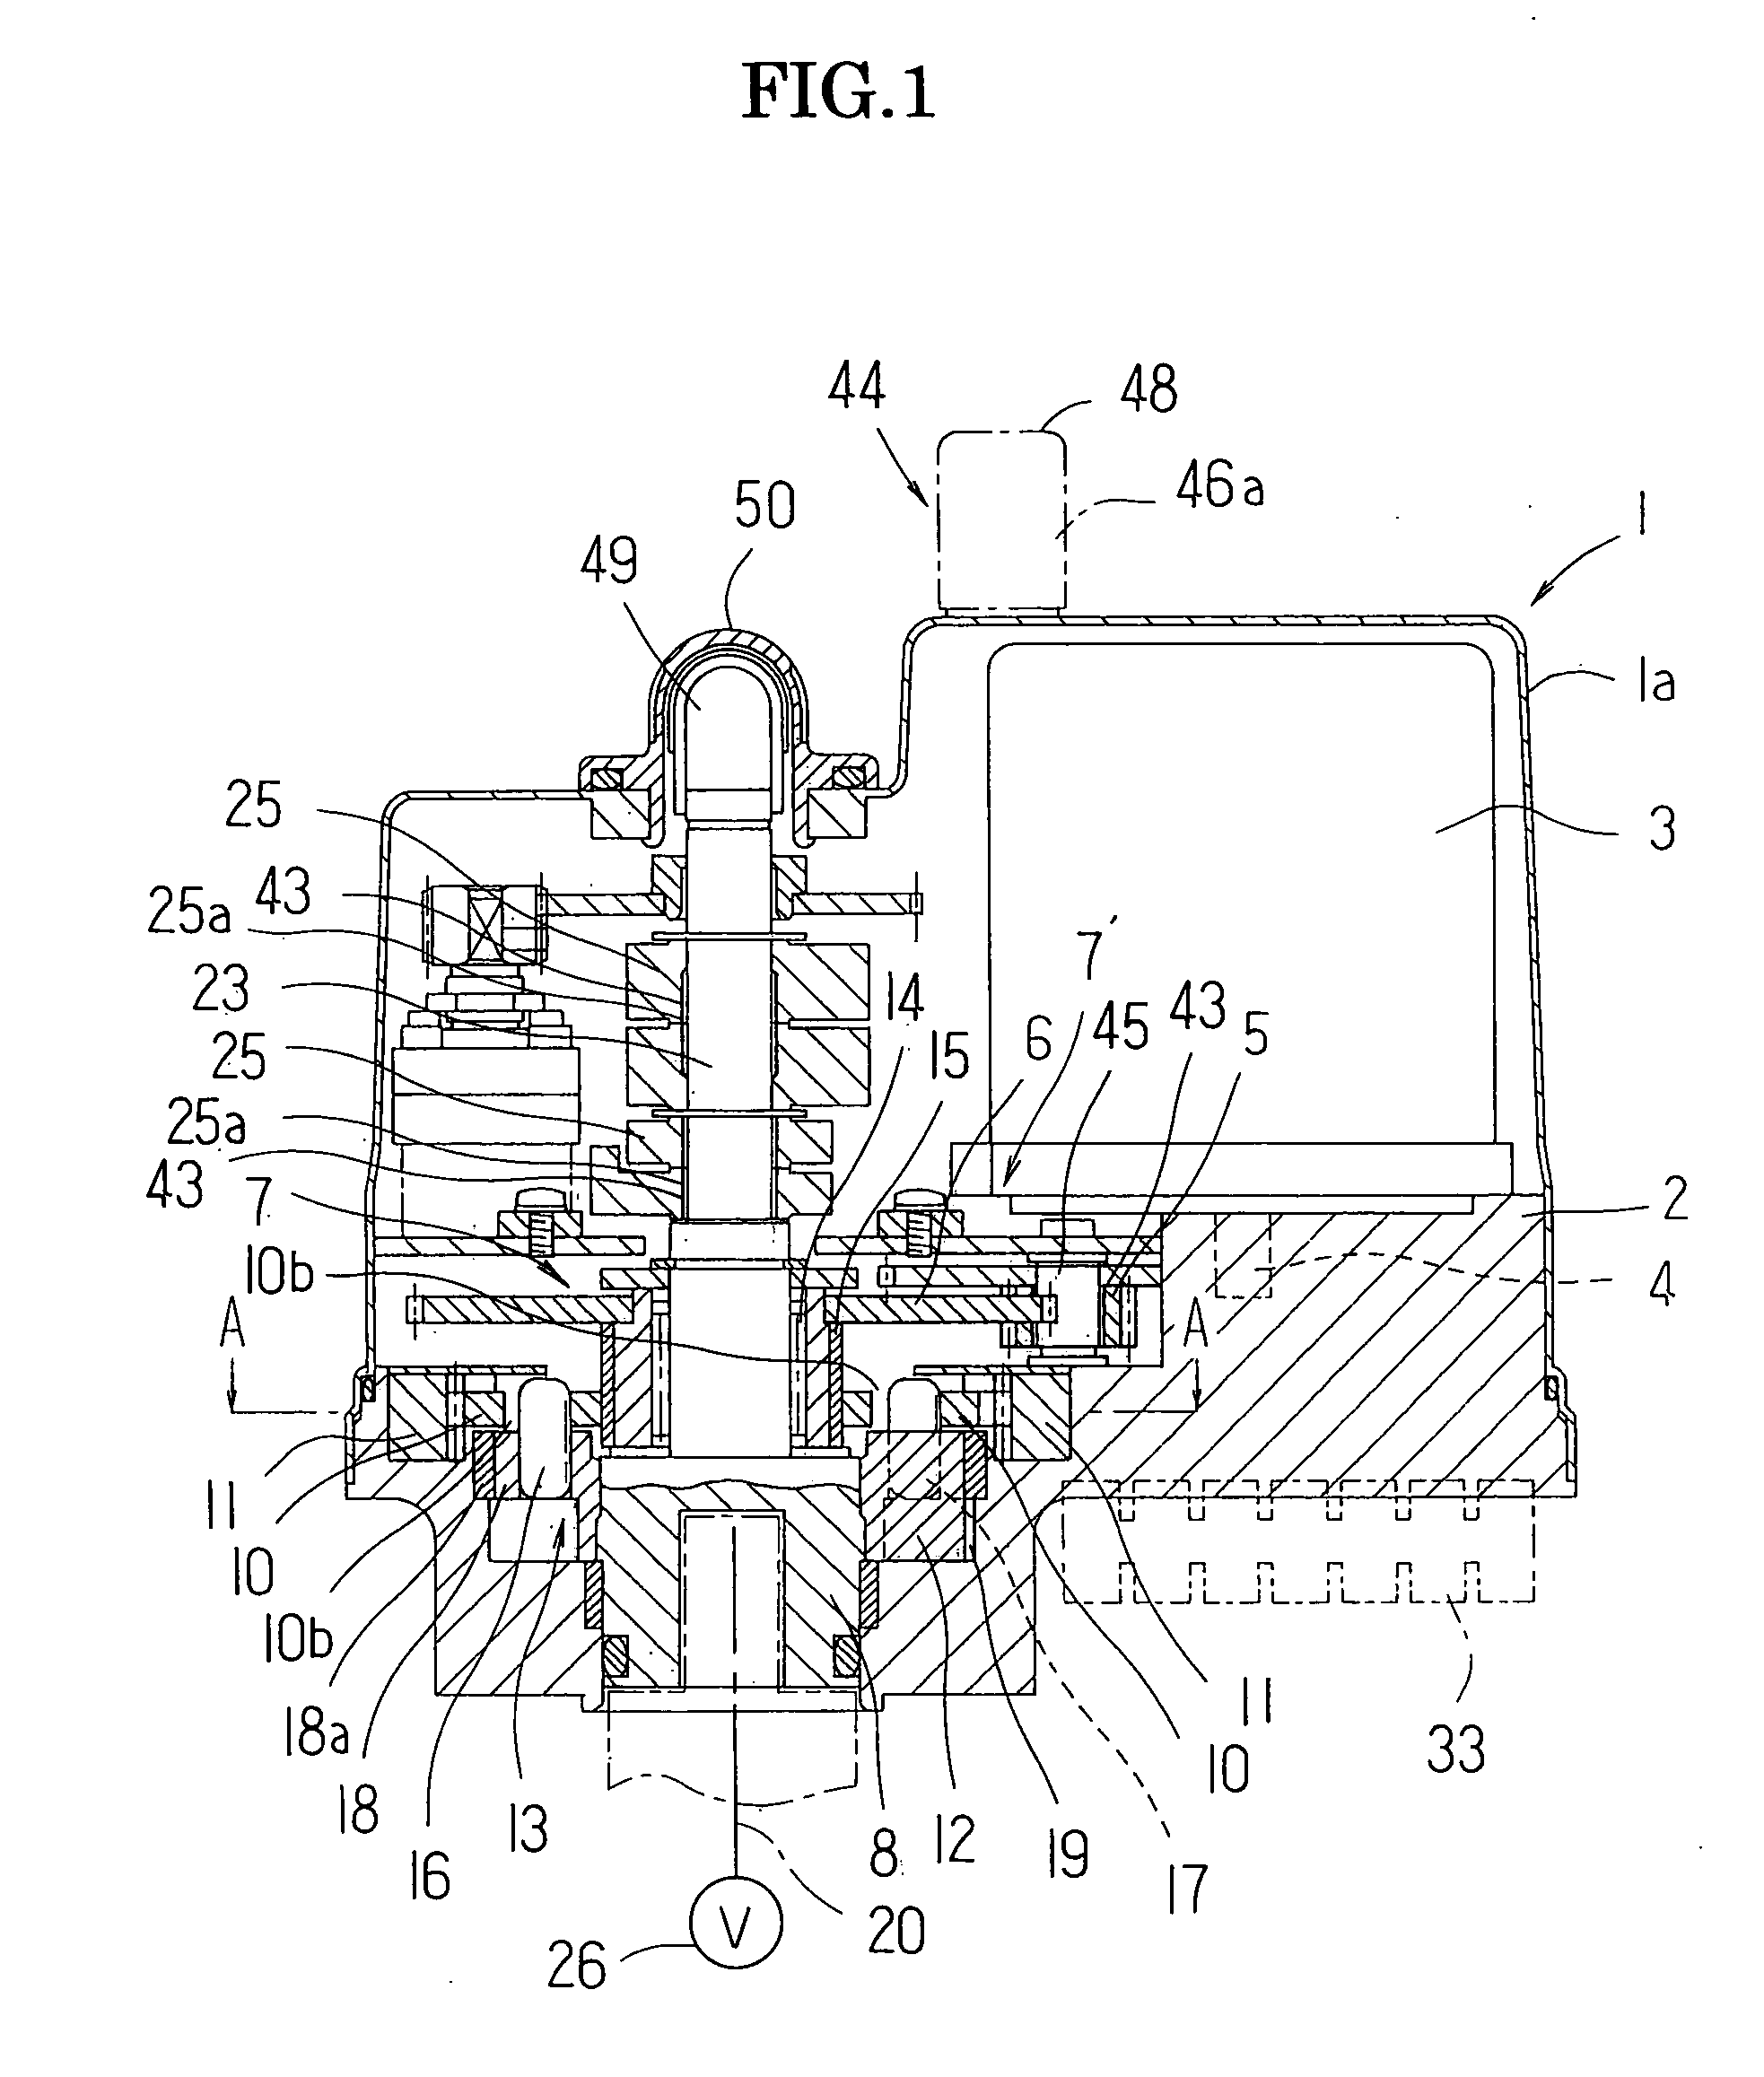 Actuator for valve